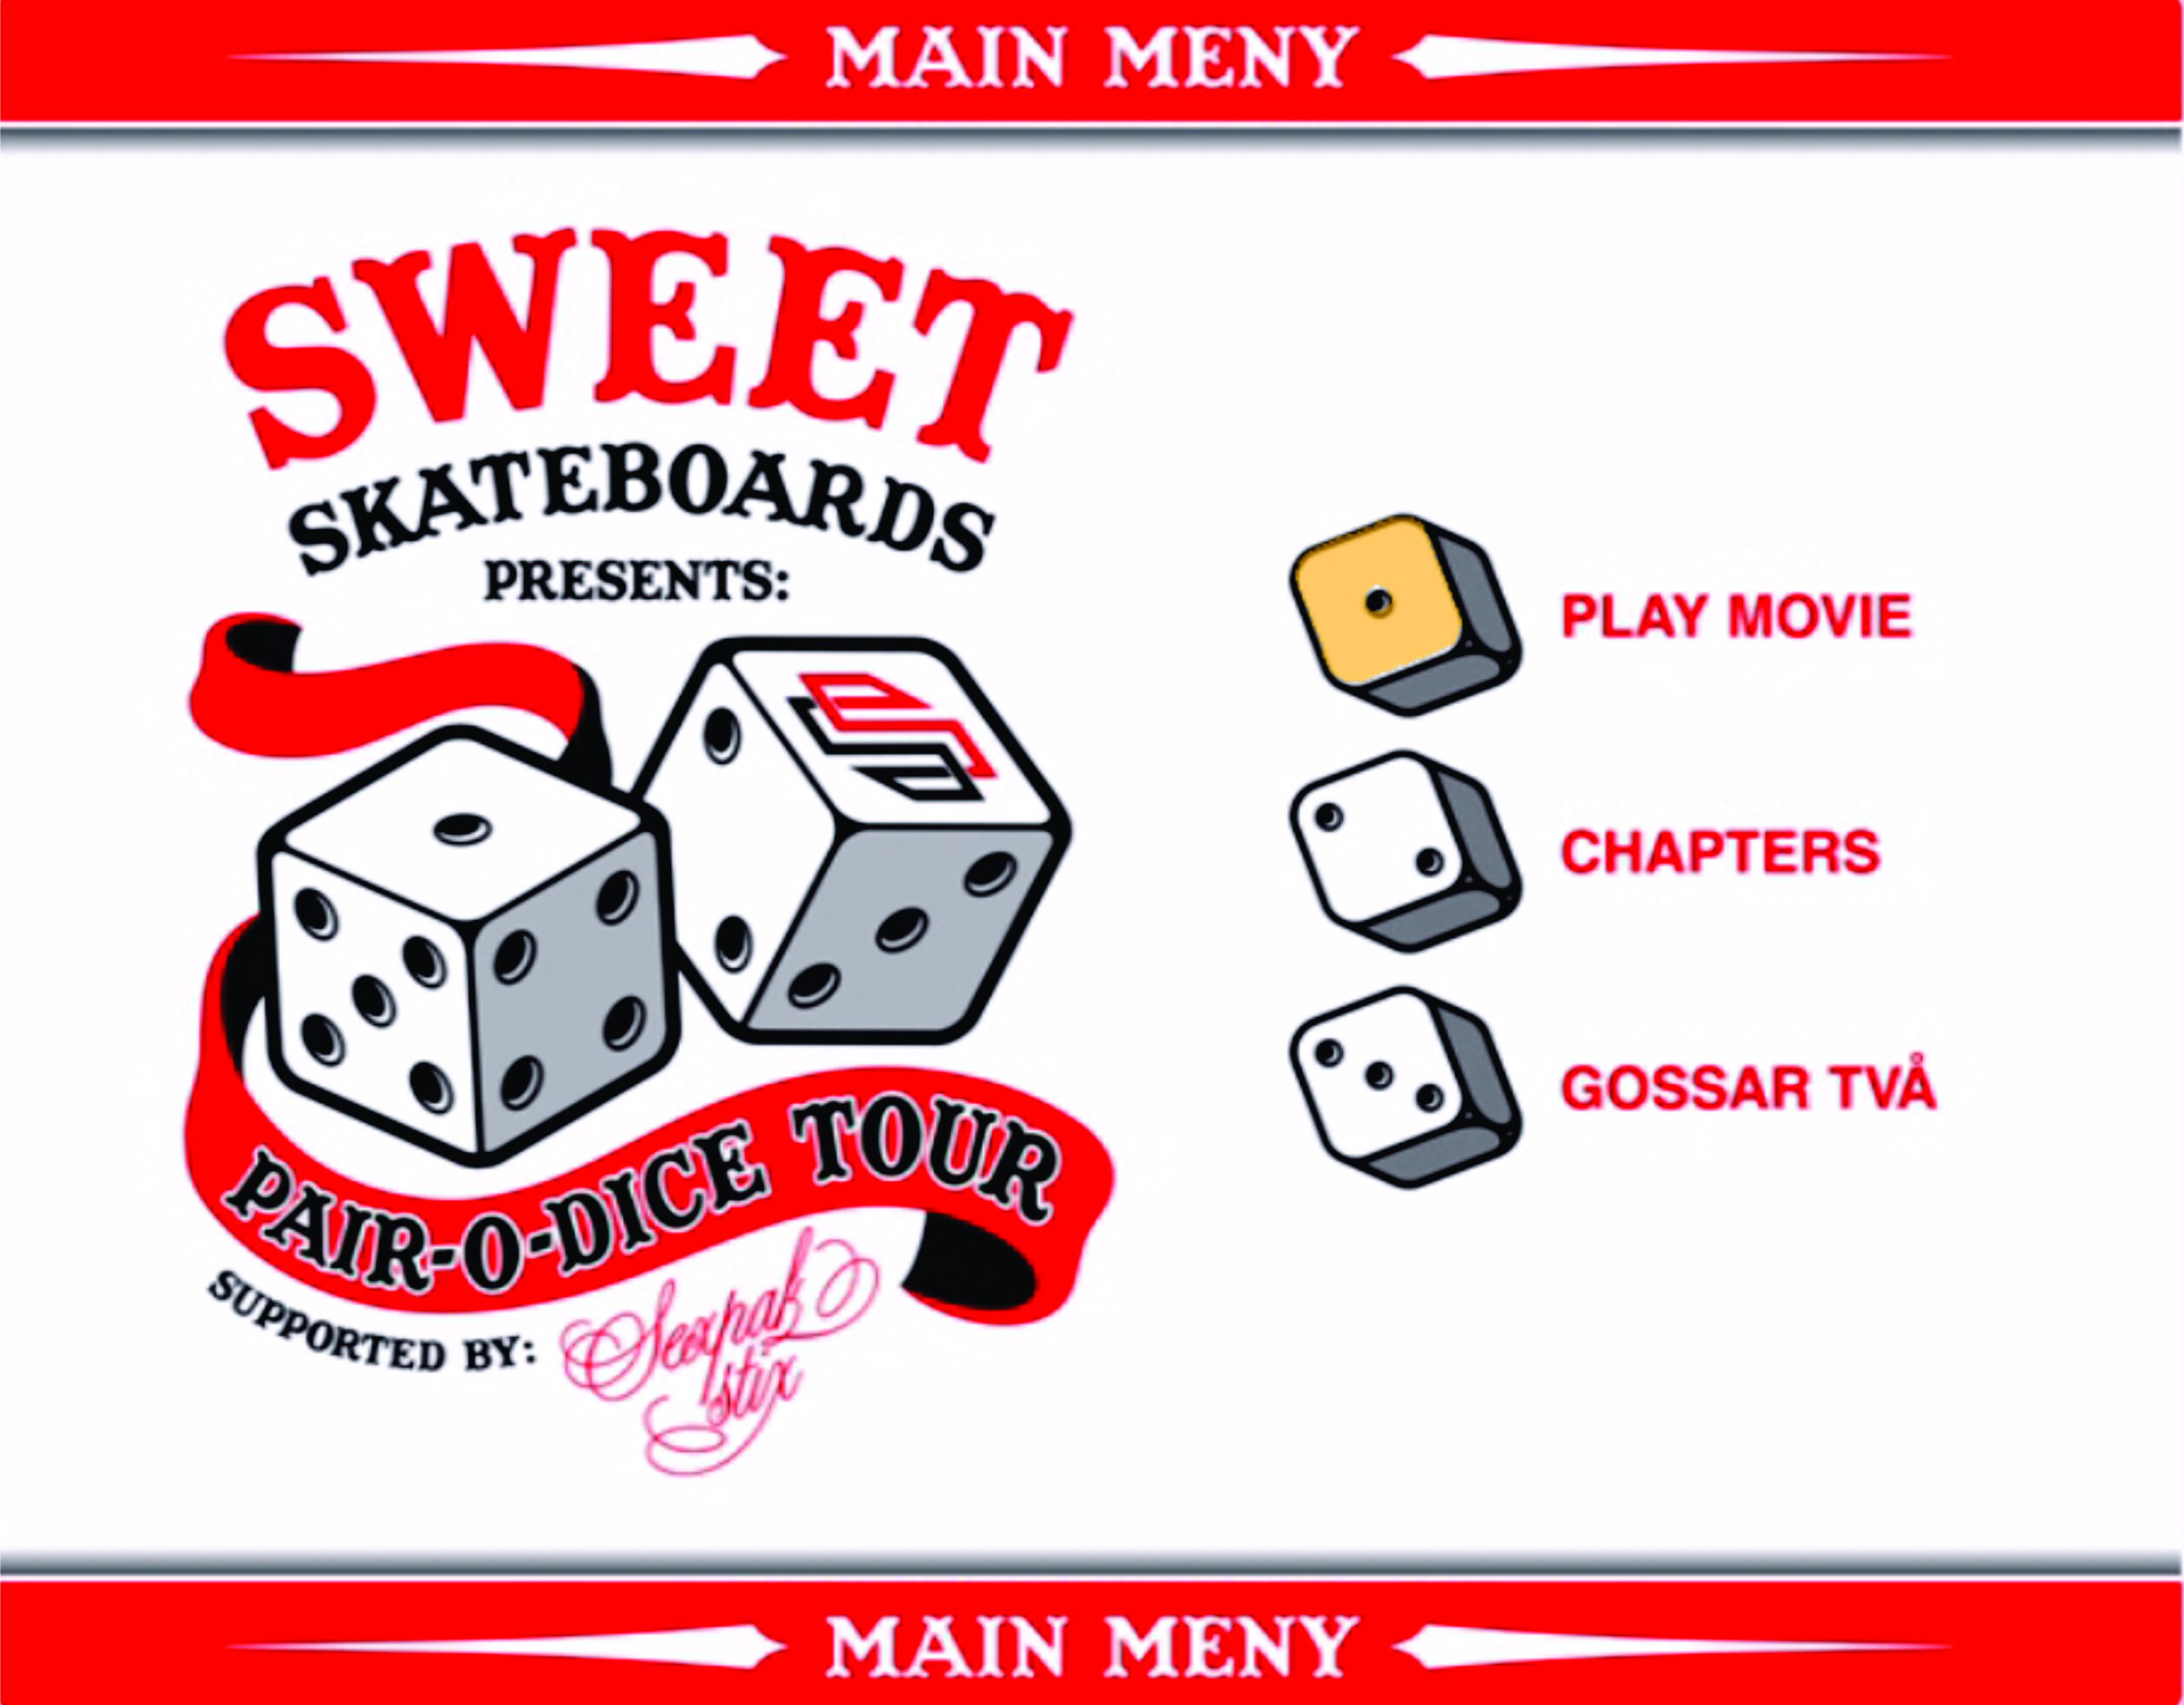 Sweet - Pair-O-Dice Tour cover art